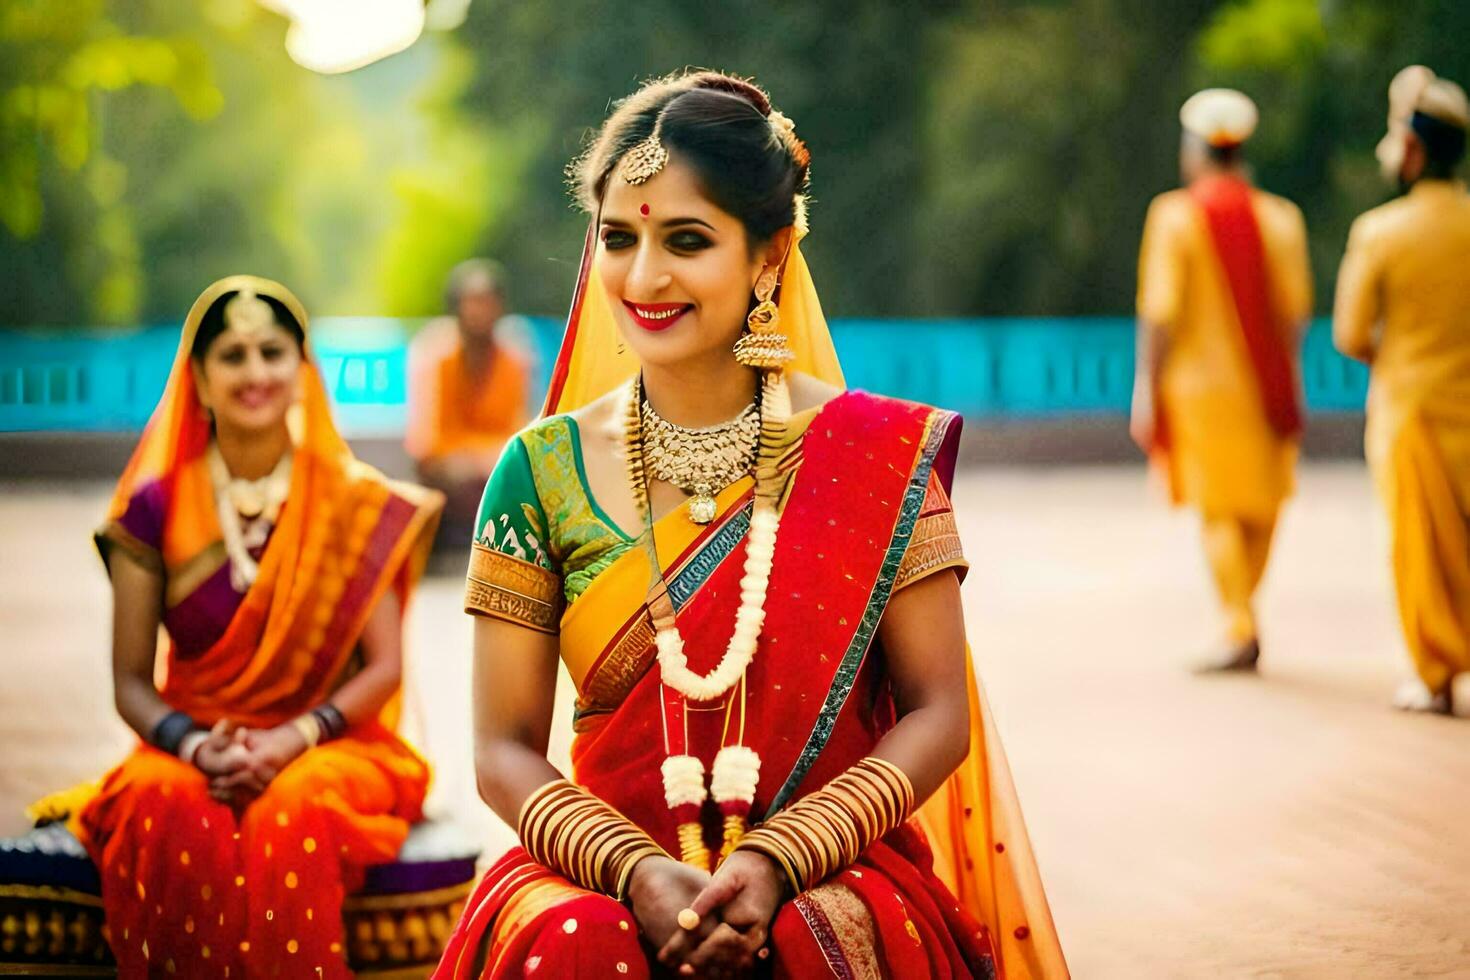 indiano noiva dentro tradicional traje. gerado por IA foto